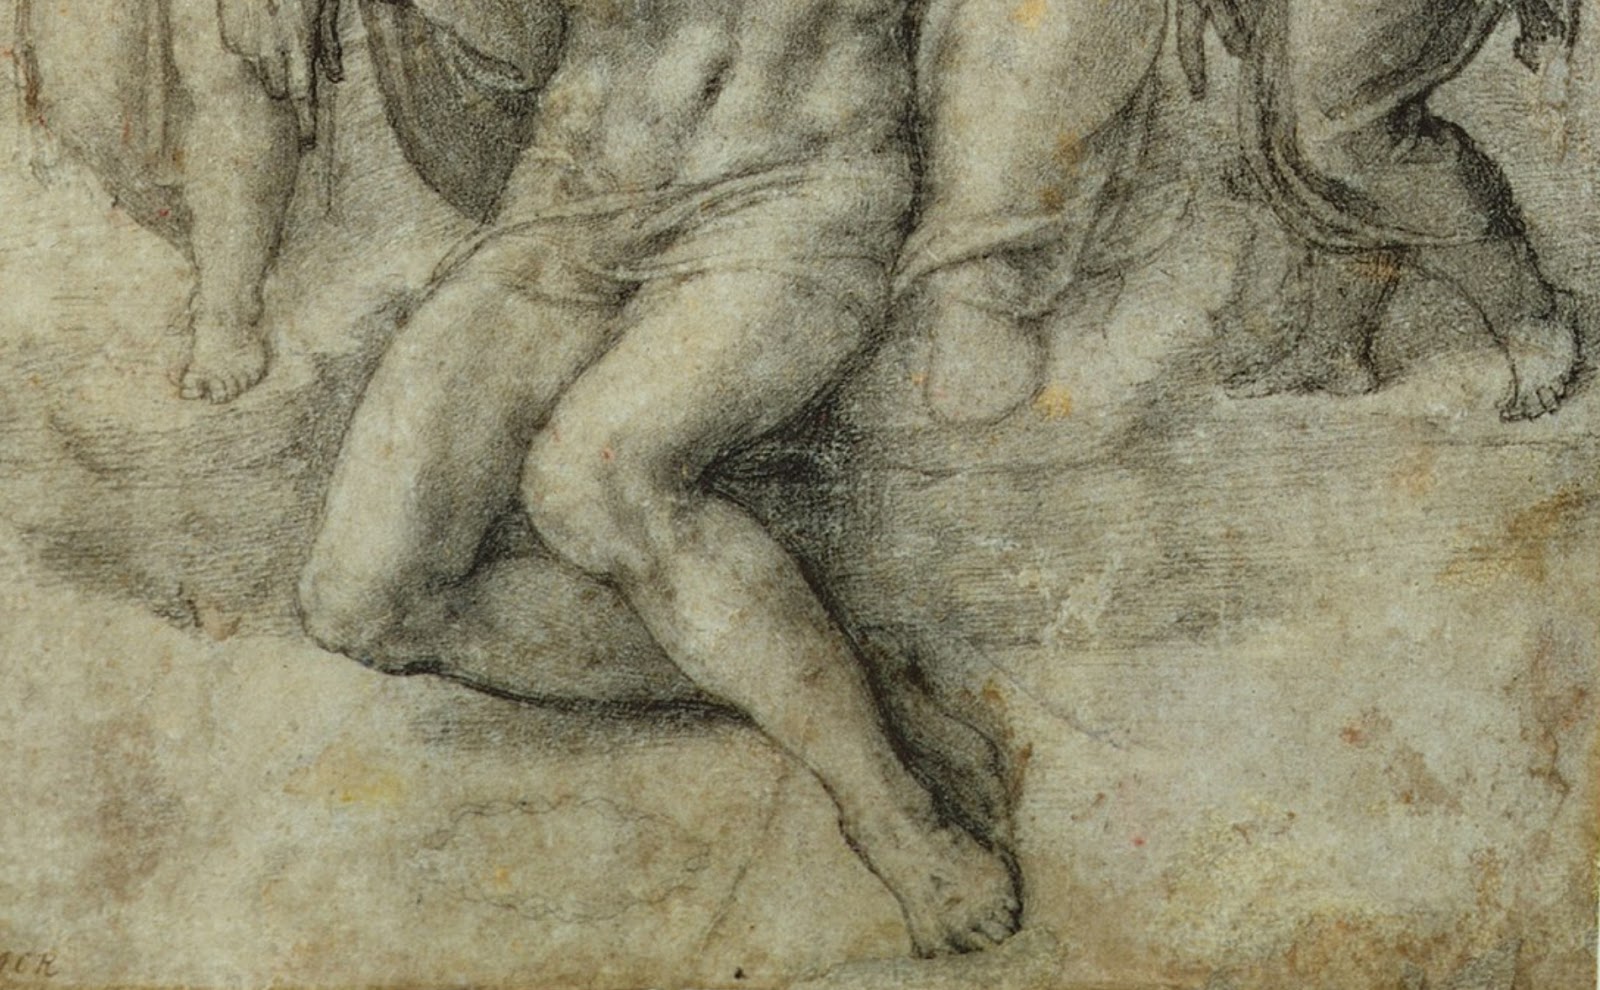 Michelangelo+Buonarroti-1475-1564 (441).jpg